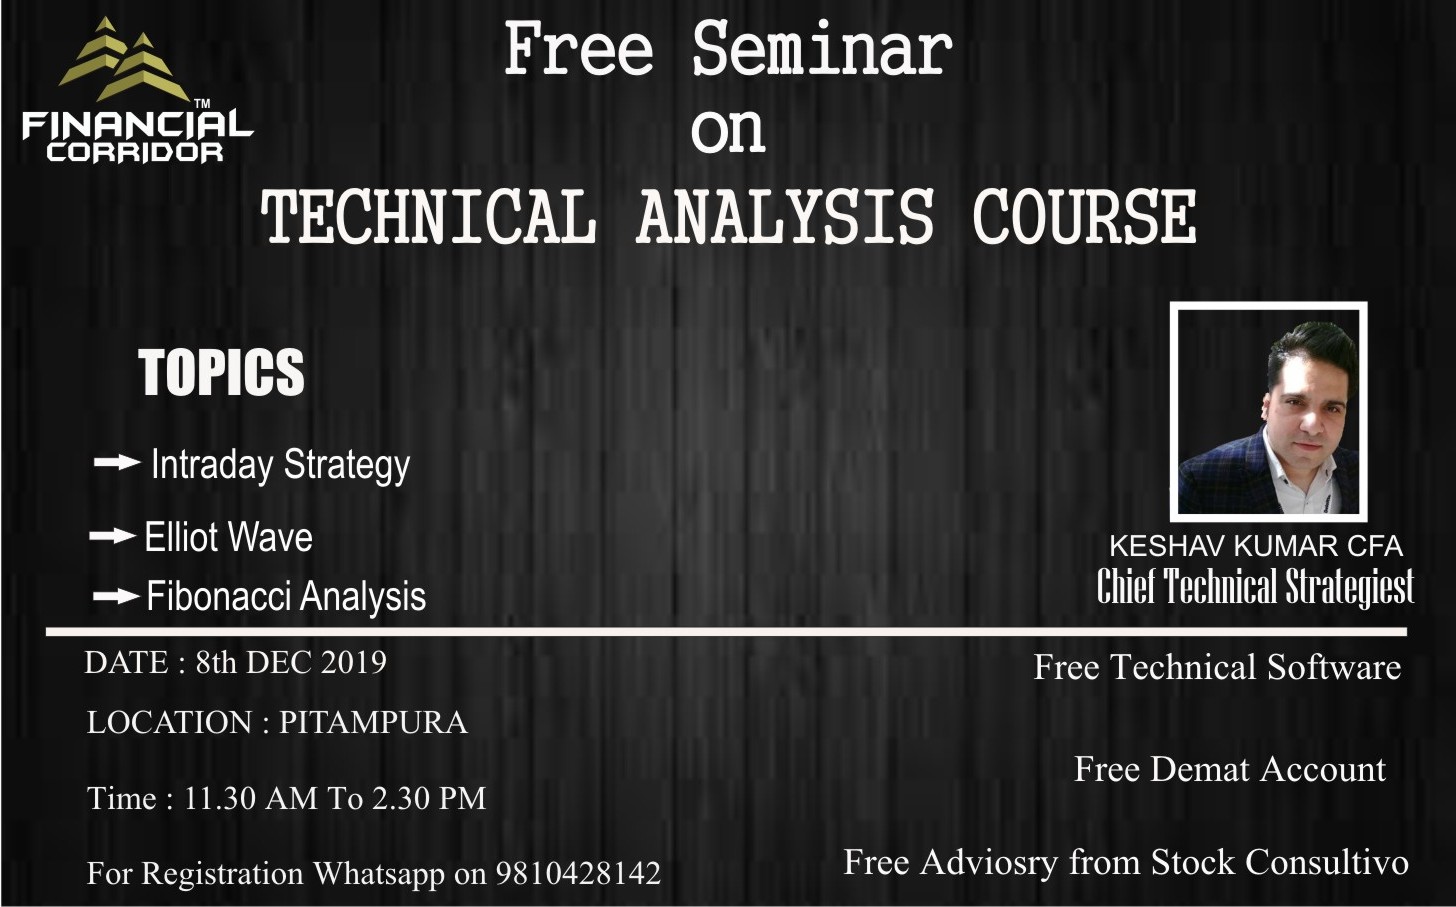 Free Seminar on Technical Analysis course, North West Delhi, Delhi, India